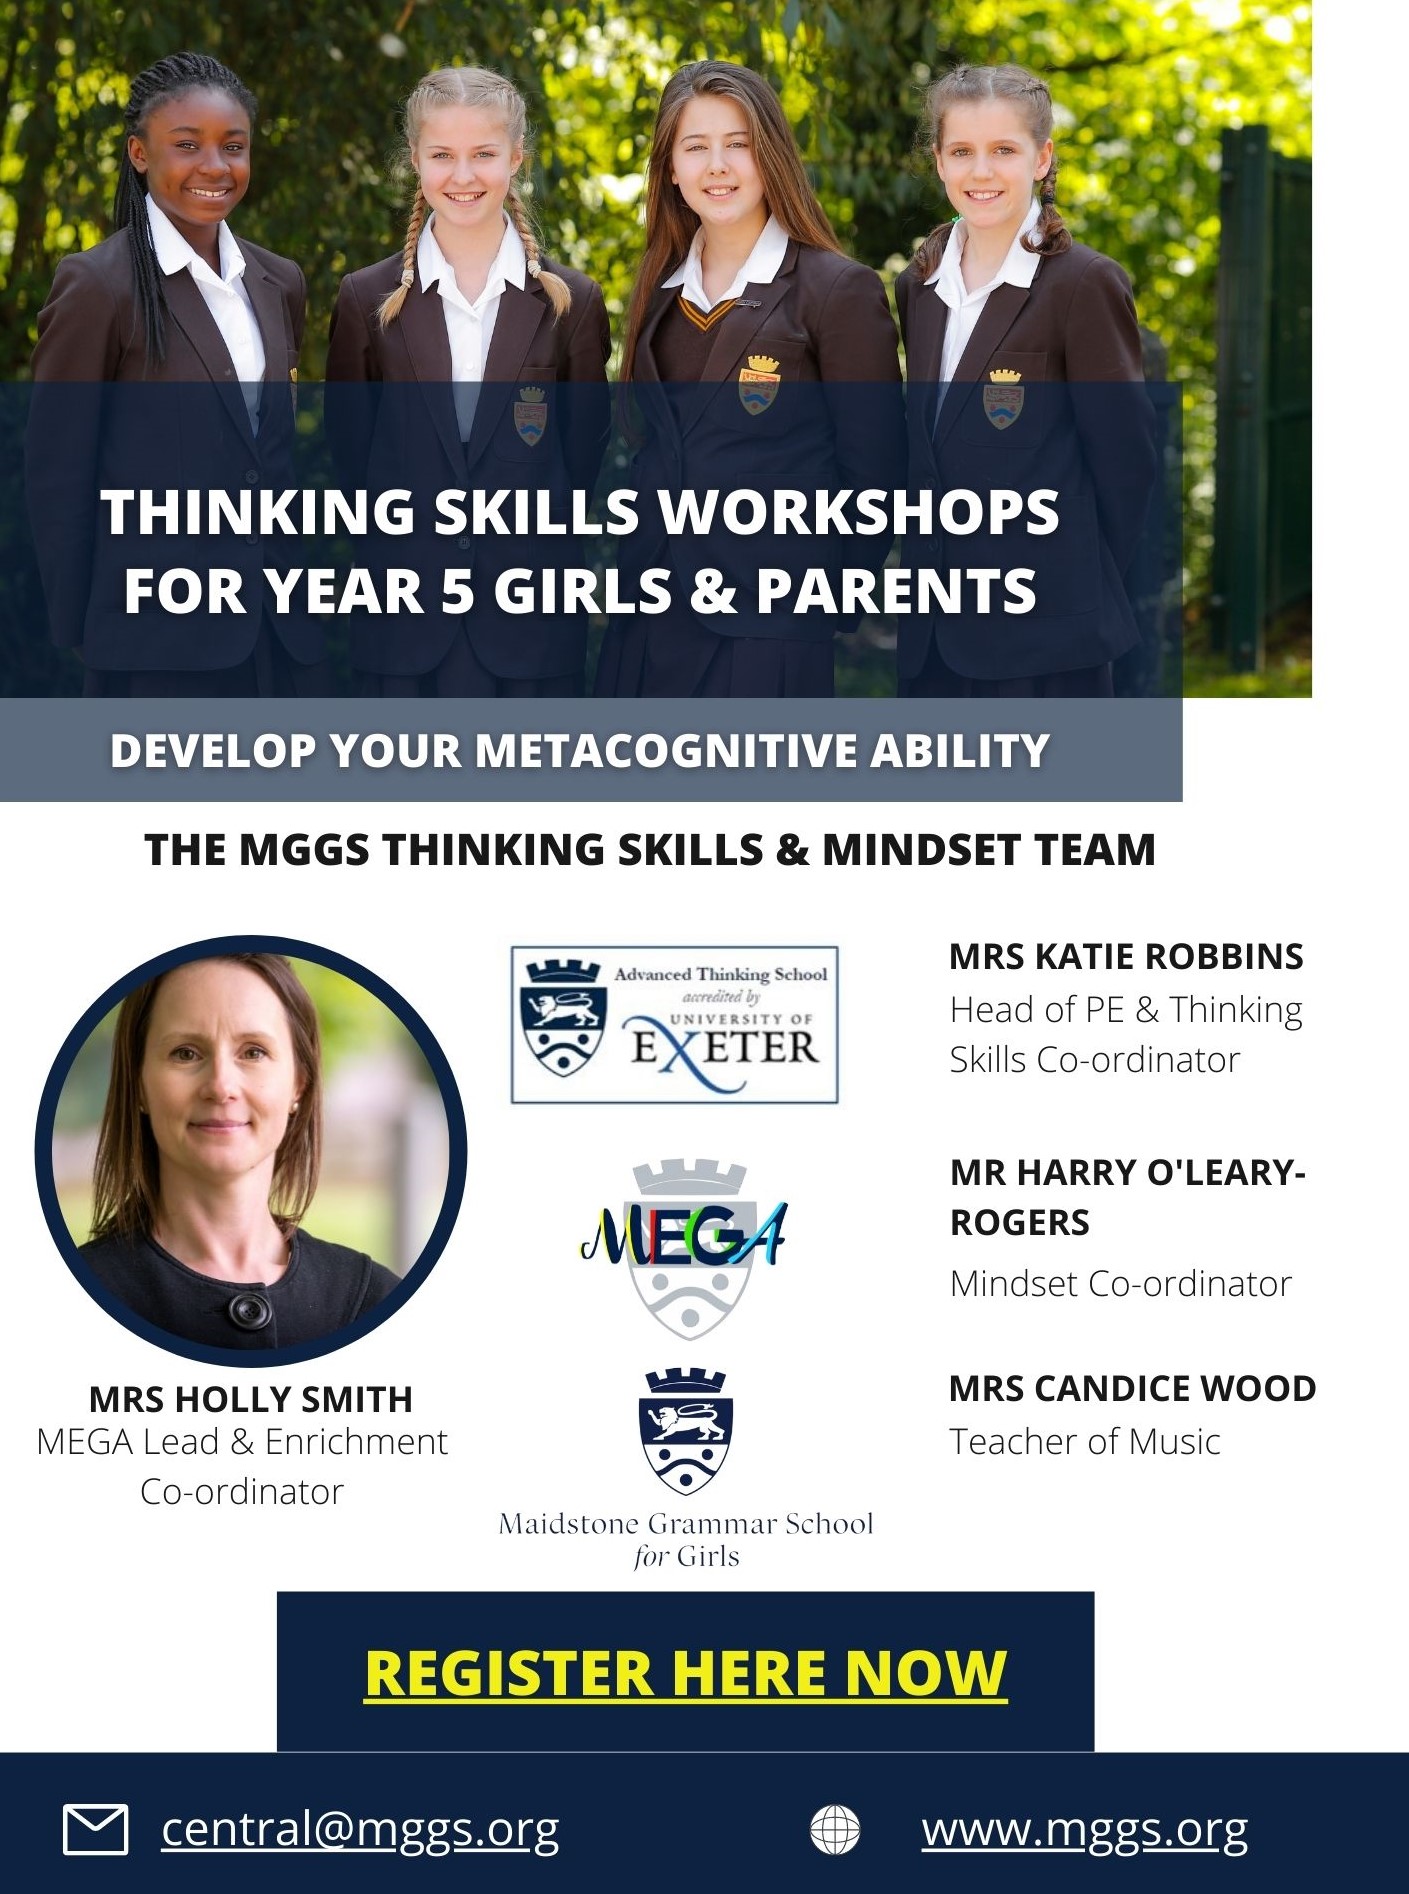 MGGS Thinking Skills Workshop Page 2